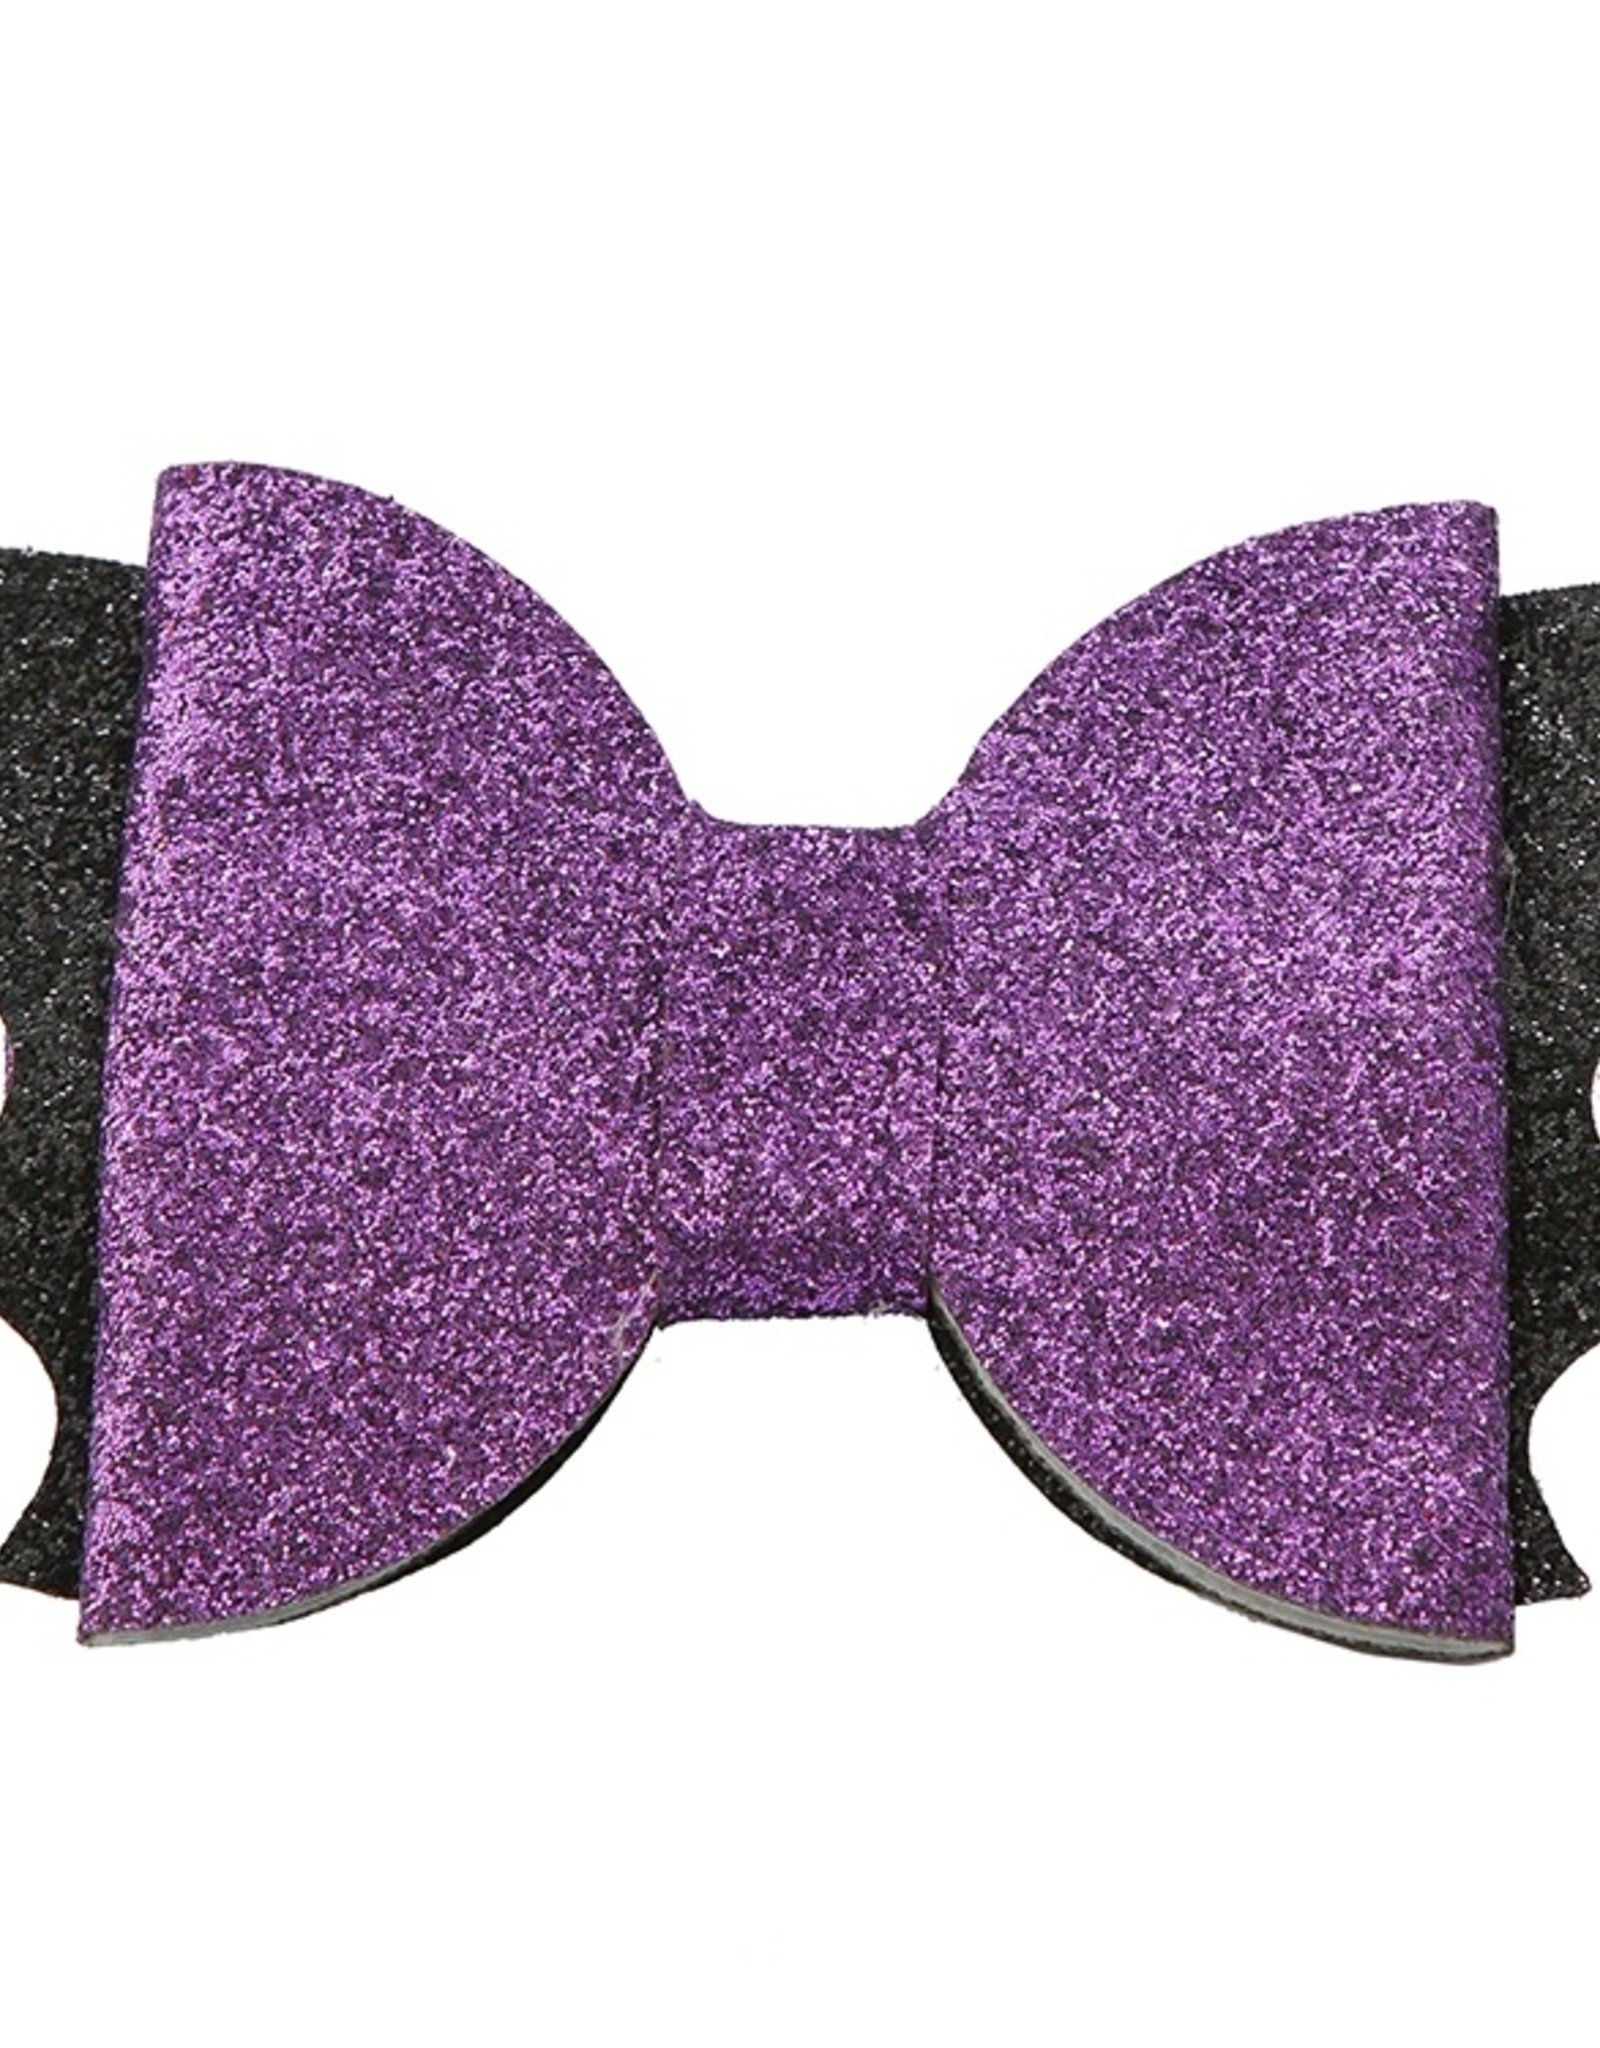 Halloween Bat Glitter Clip or Headband